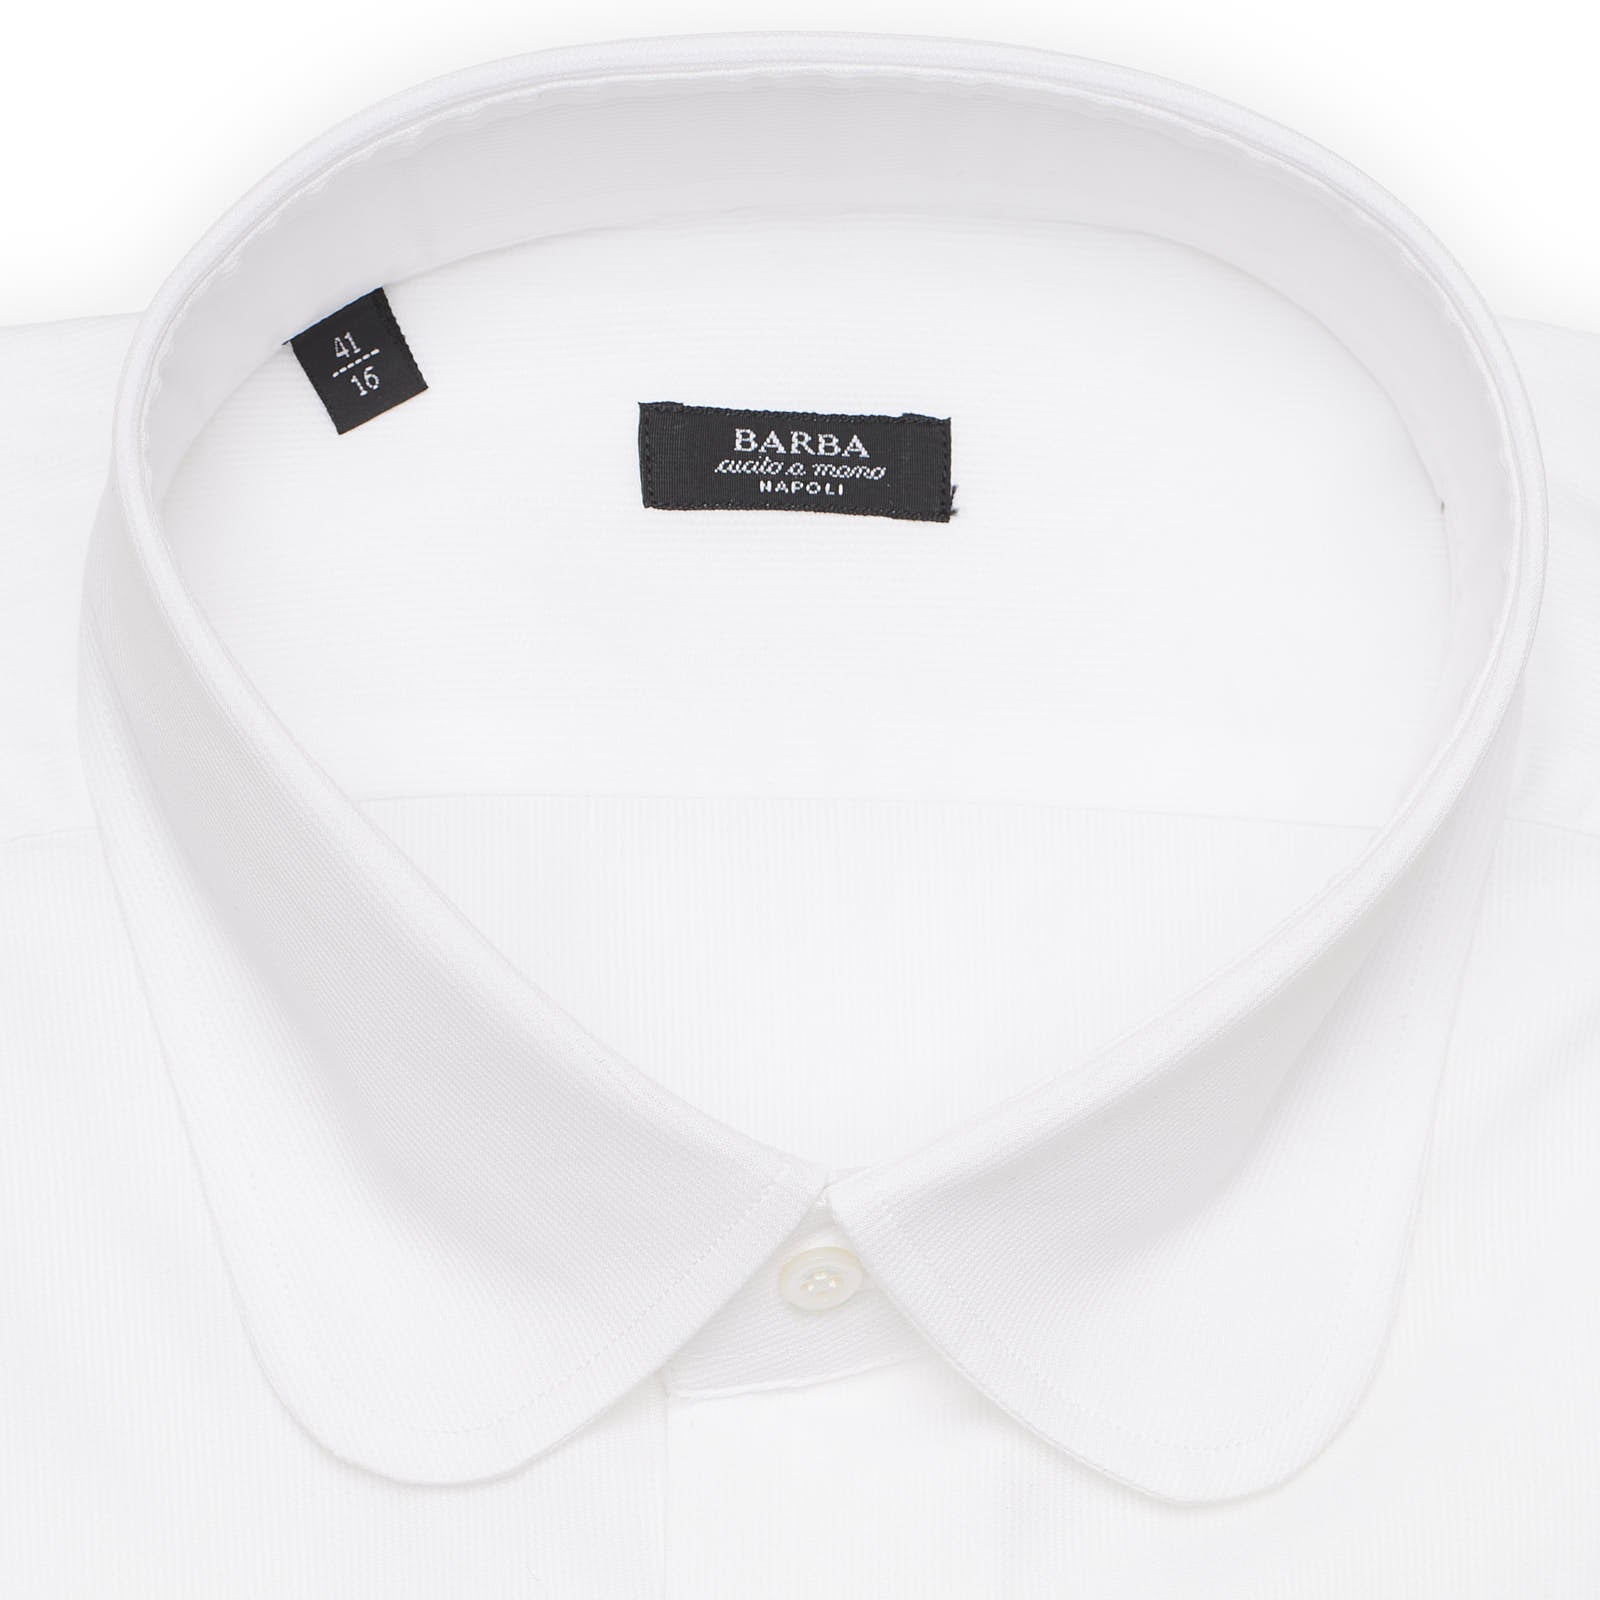 BARBA Napoli Handmade White Twill Cotton Dress Shirt NEW Club Collar